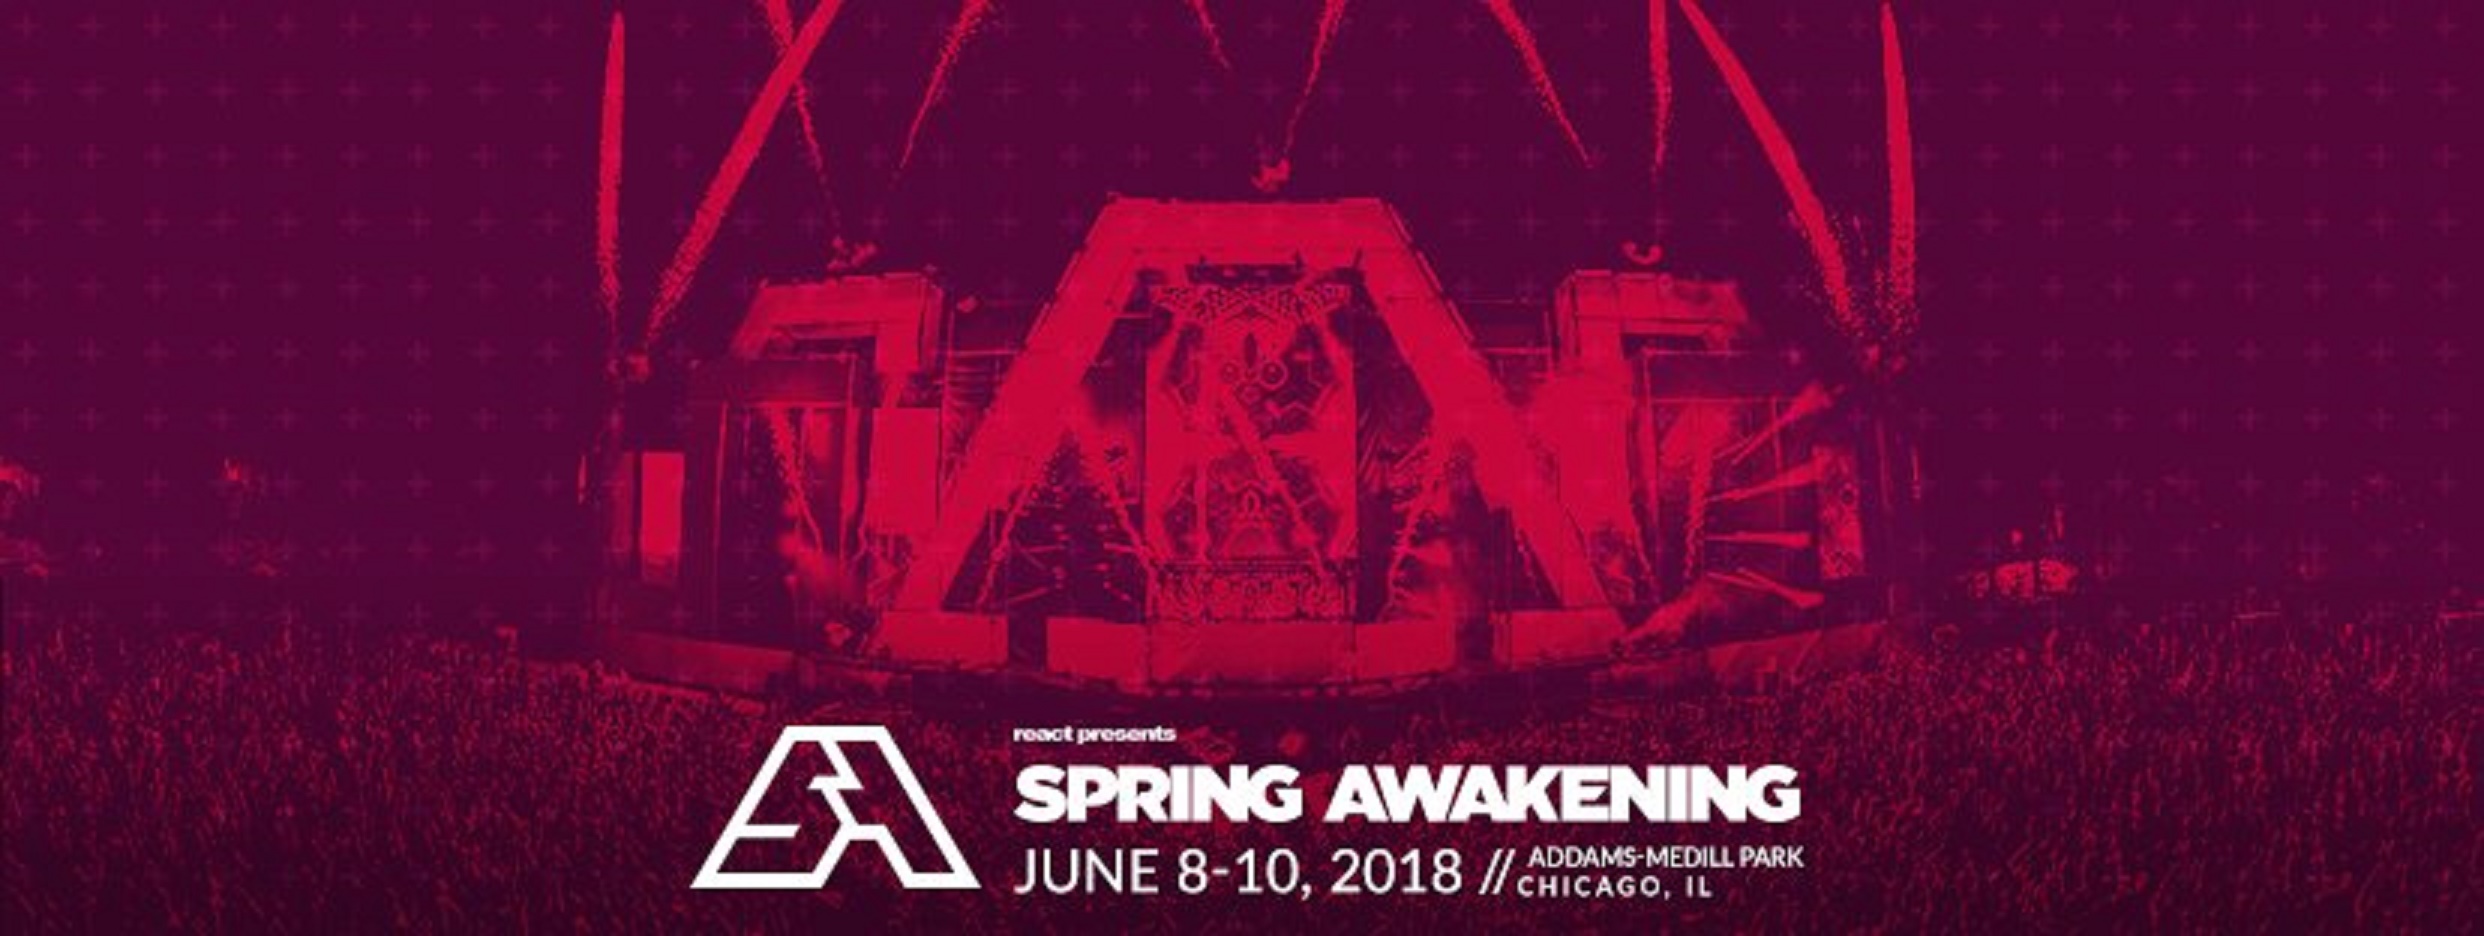 Spring Awakening Announces 2018 Dates